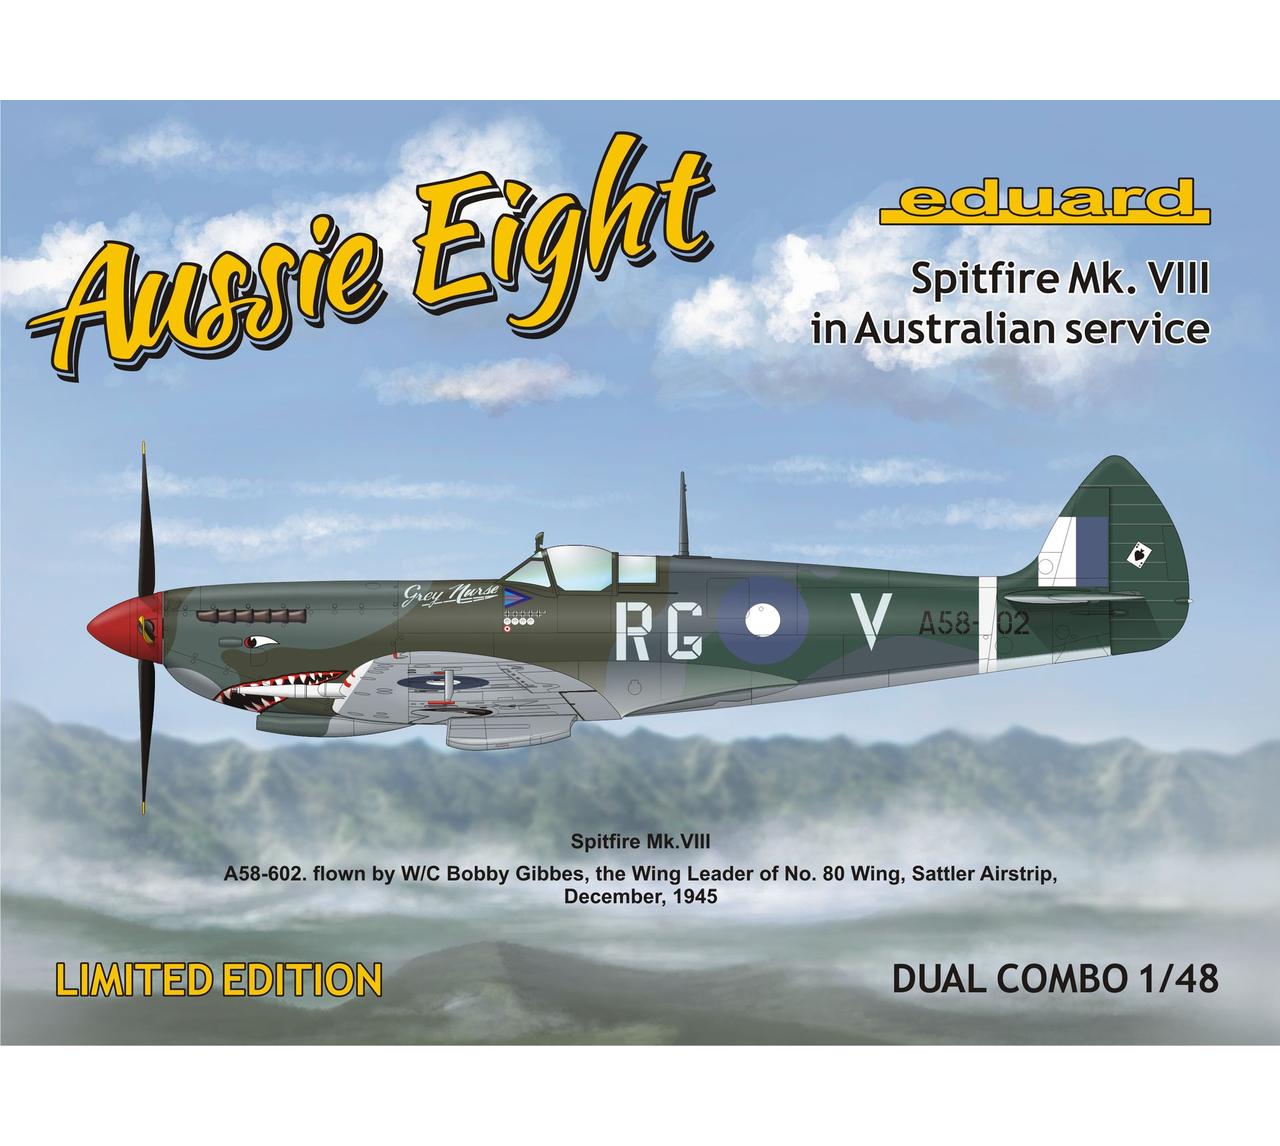 Eduard Spitfire-kavalkad, Aussie Eight #1 klar, Aussie Eight #2 NY!, Bonus: Airfix Spitfire XII - Sida 12 14